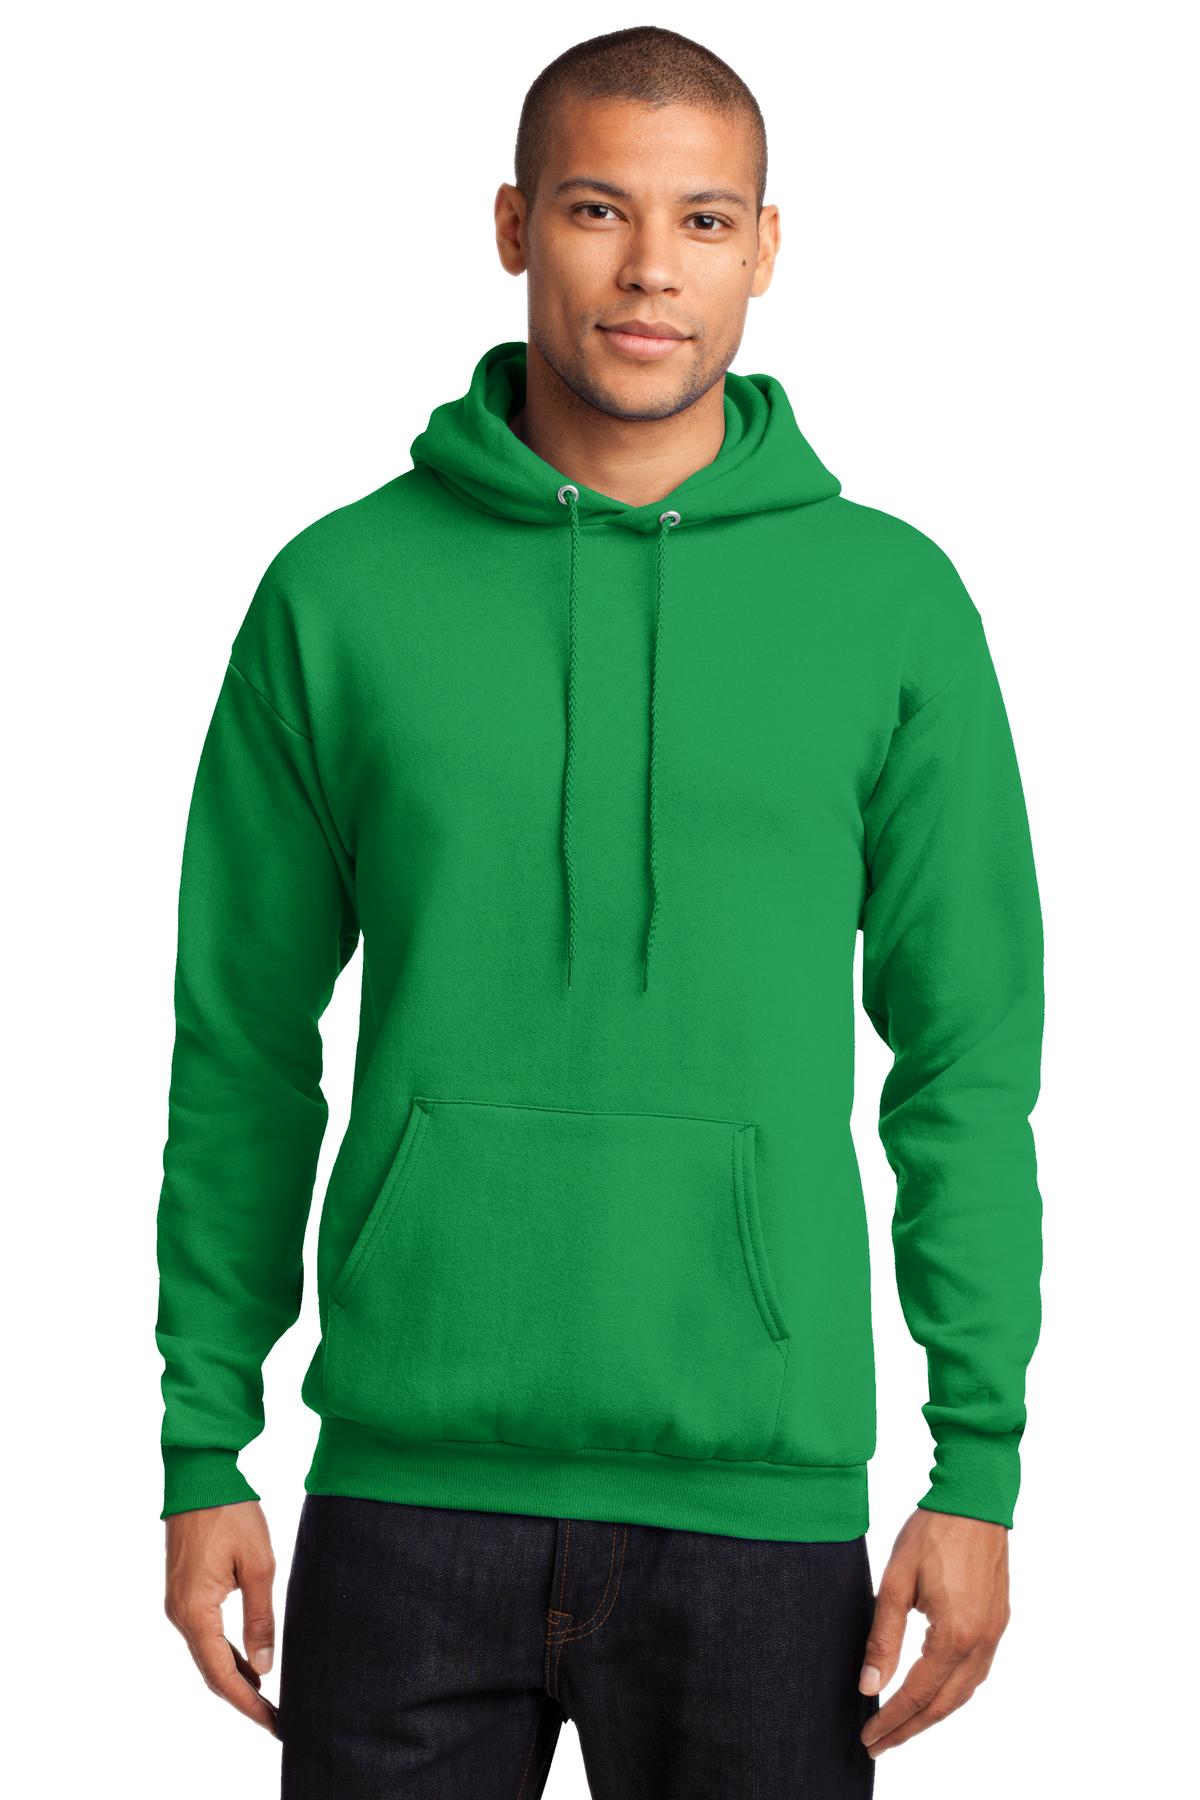 Port & Company PC78H Core Fleece Pullover Hooded Sweatshirt - Clover Green  - 3XL